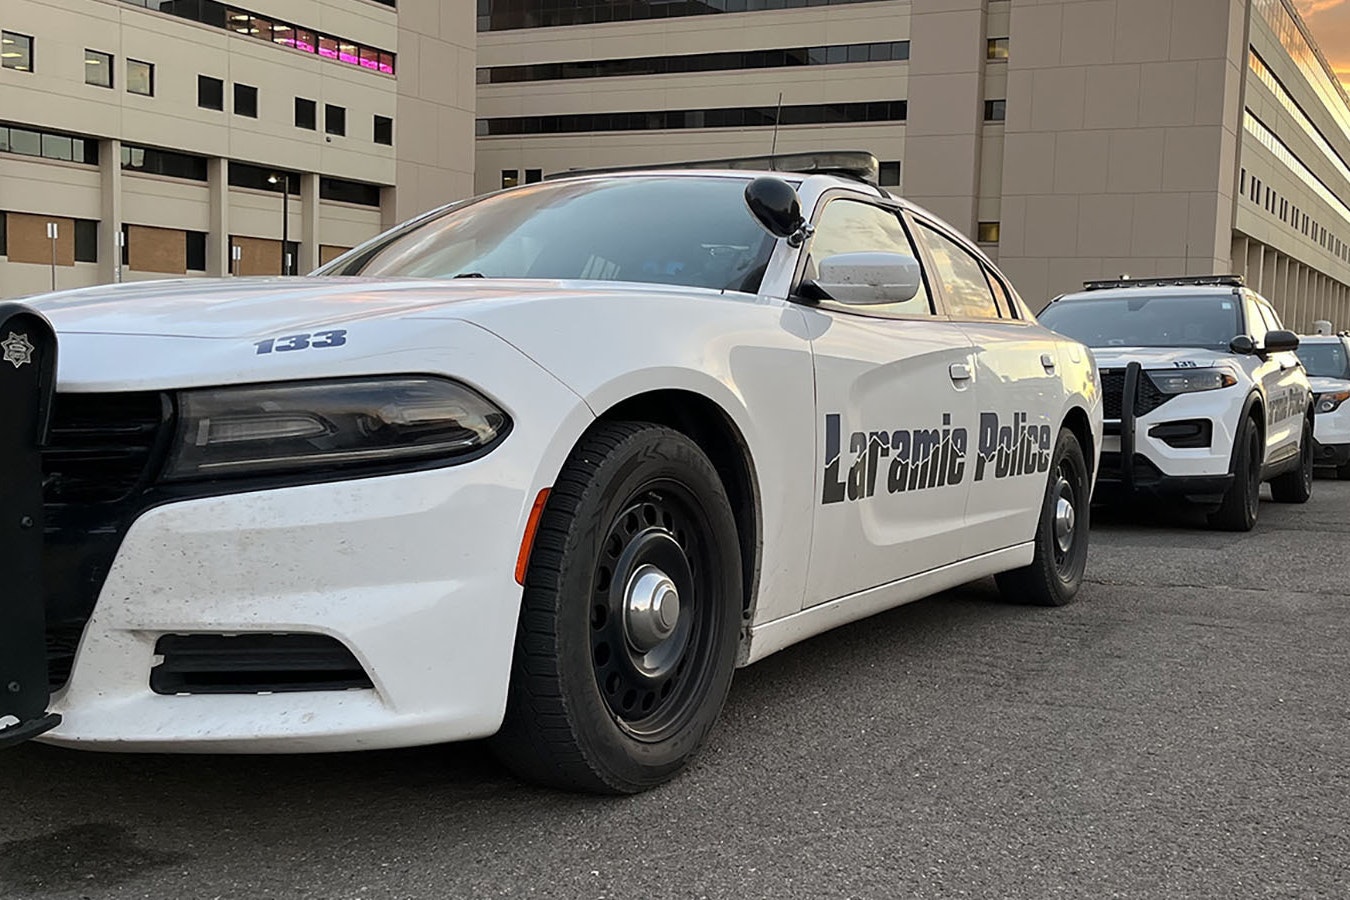 Laramie police cars 11 28 23